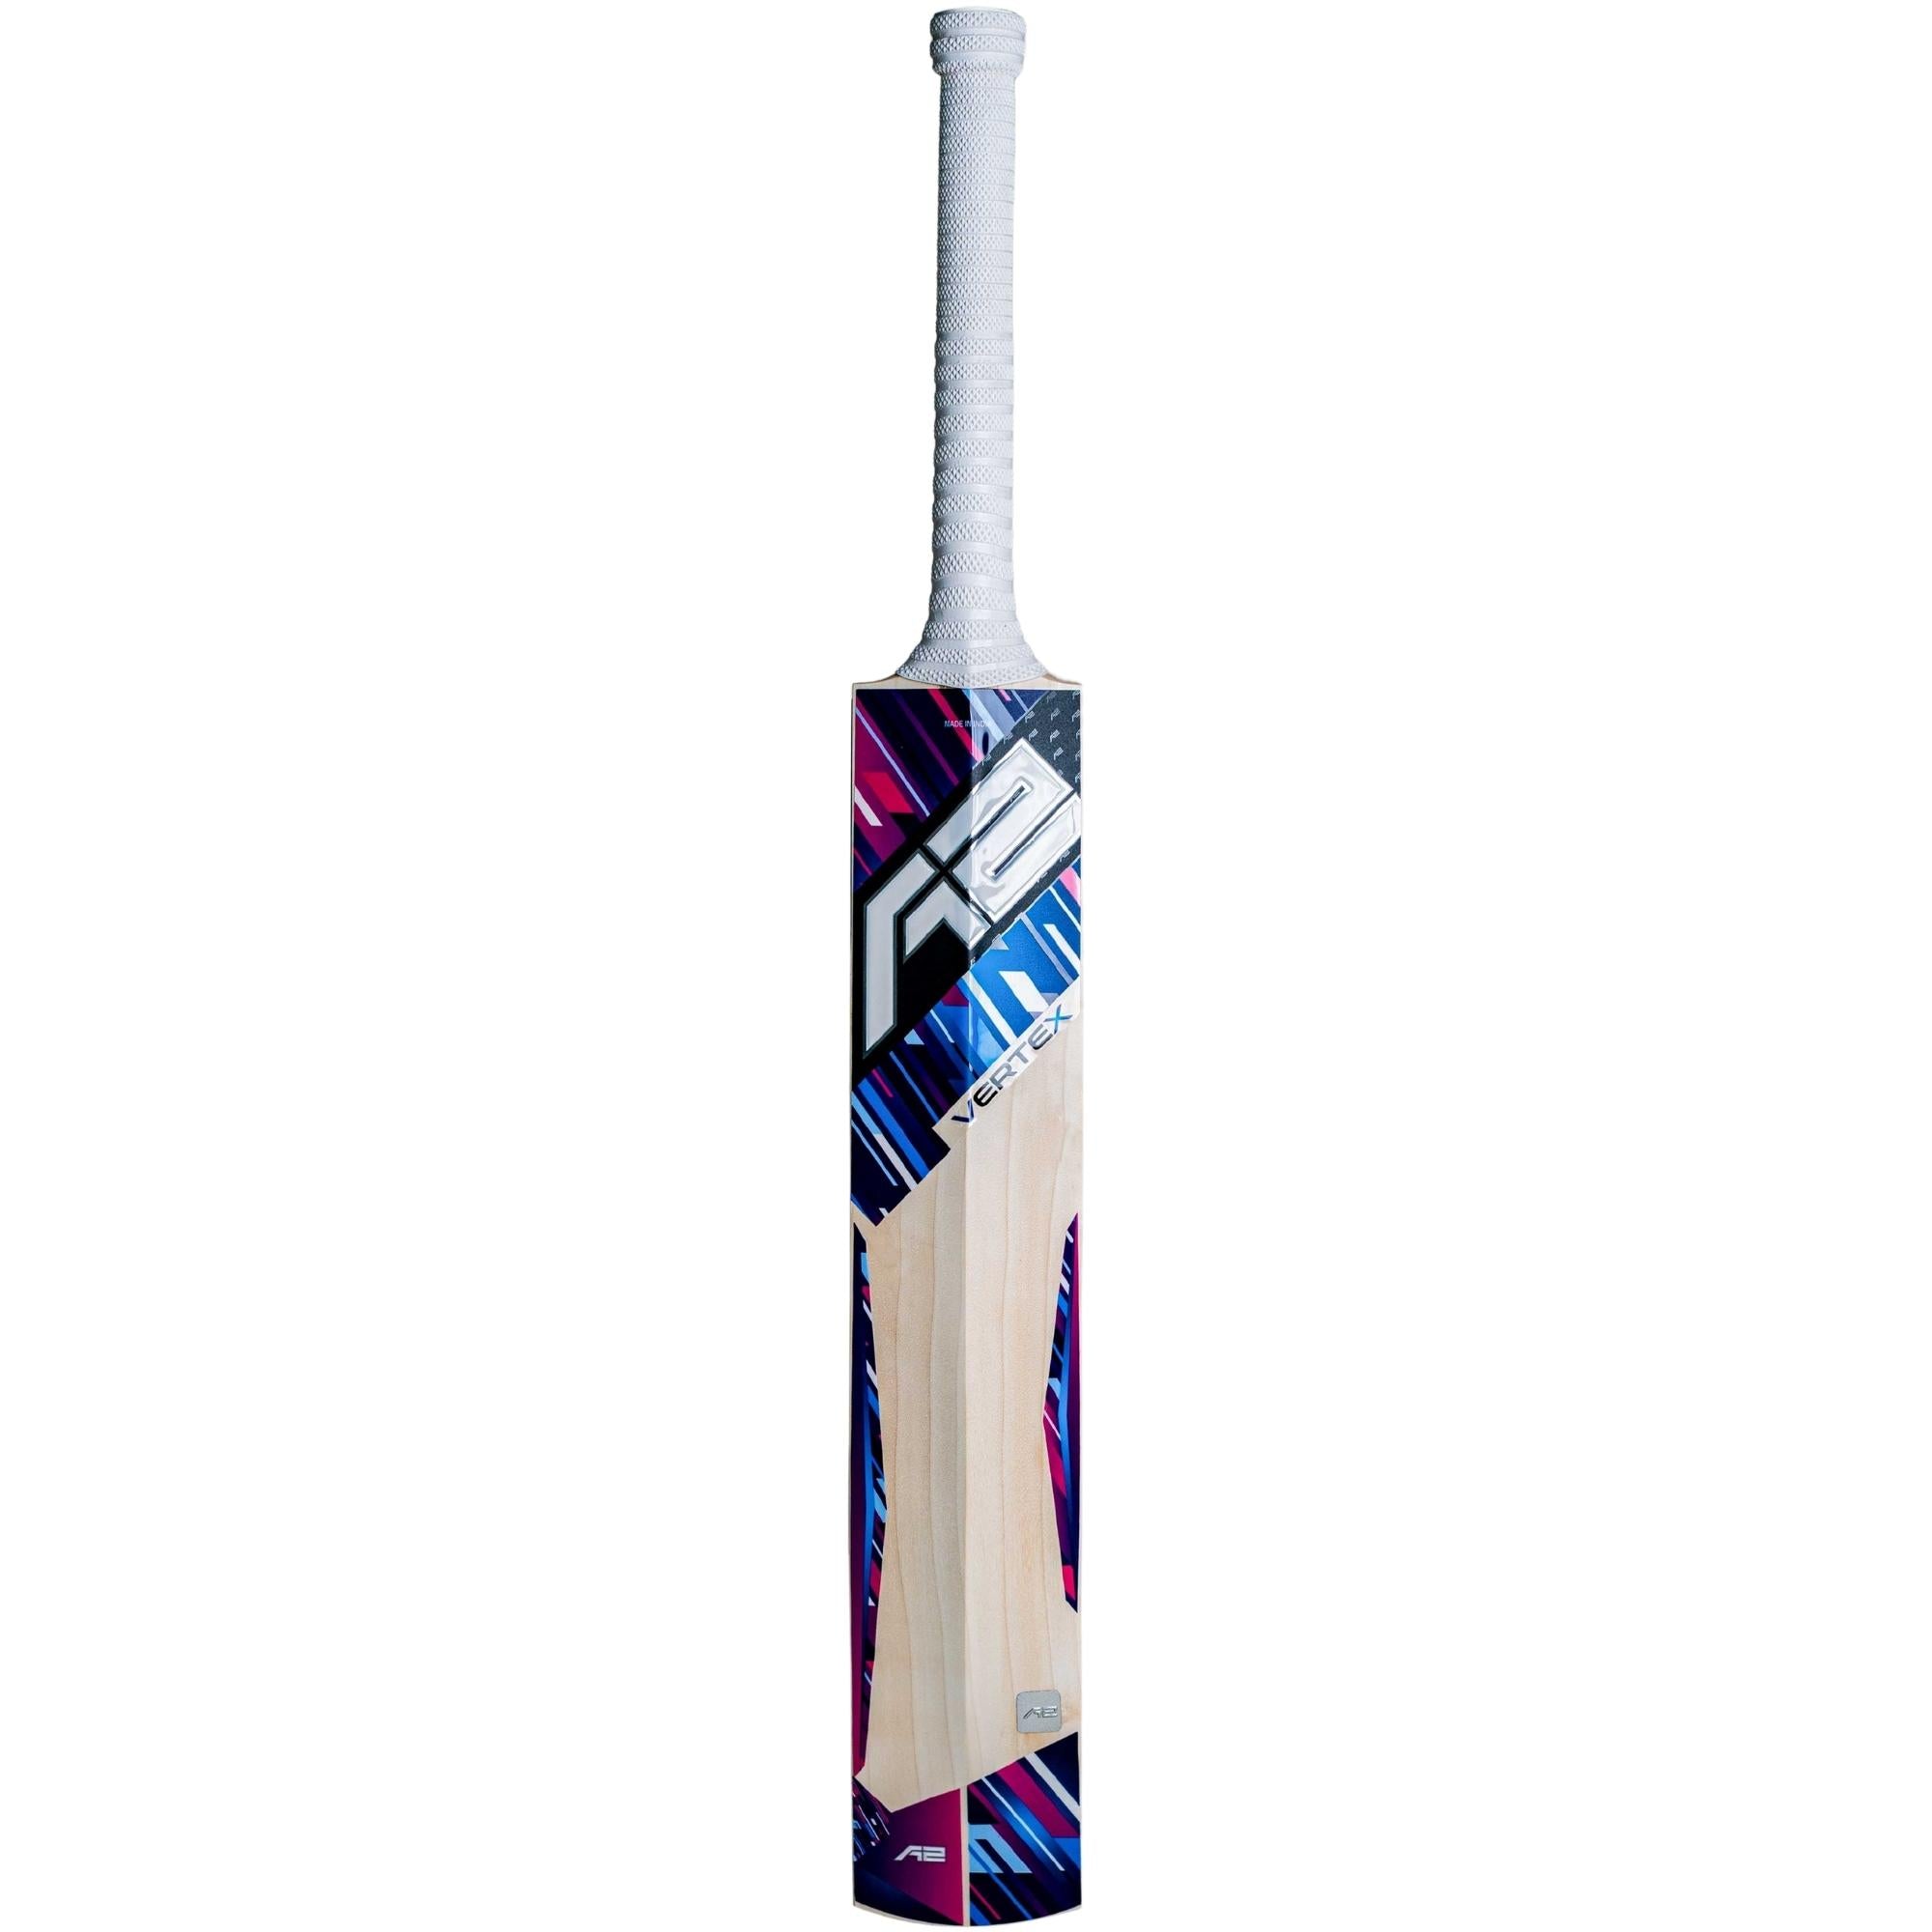 A2 Vertex Grade-2 English Willow Cricket Bat